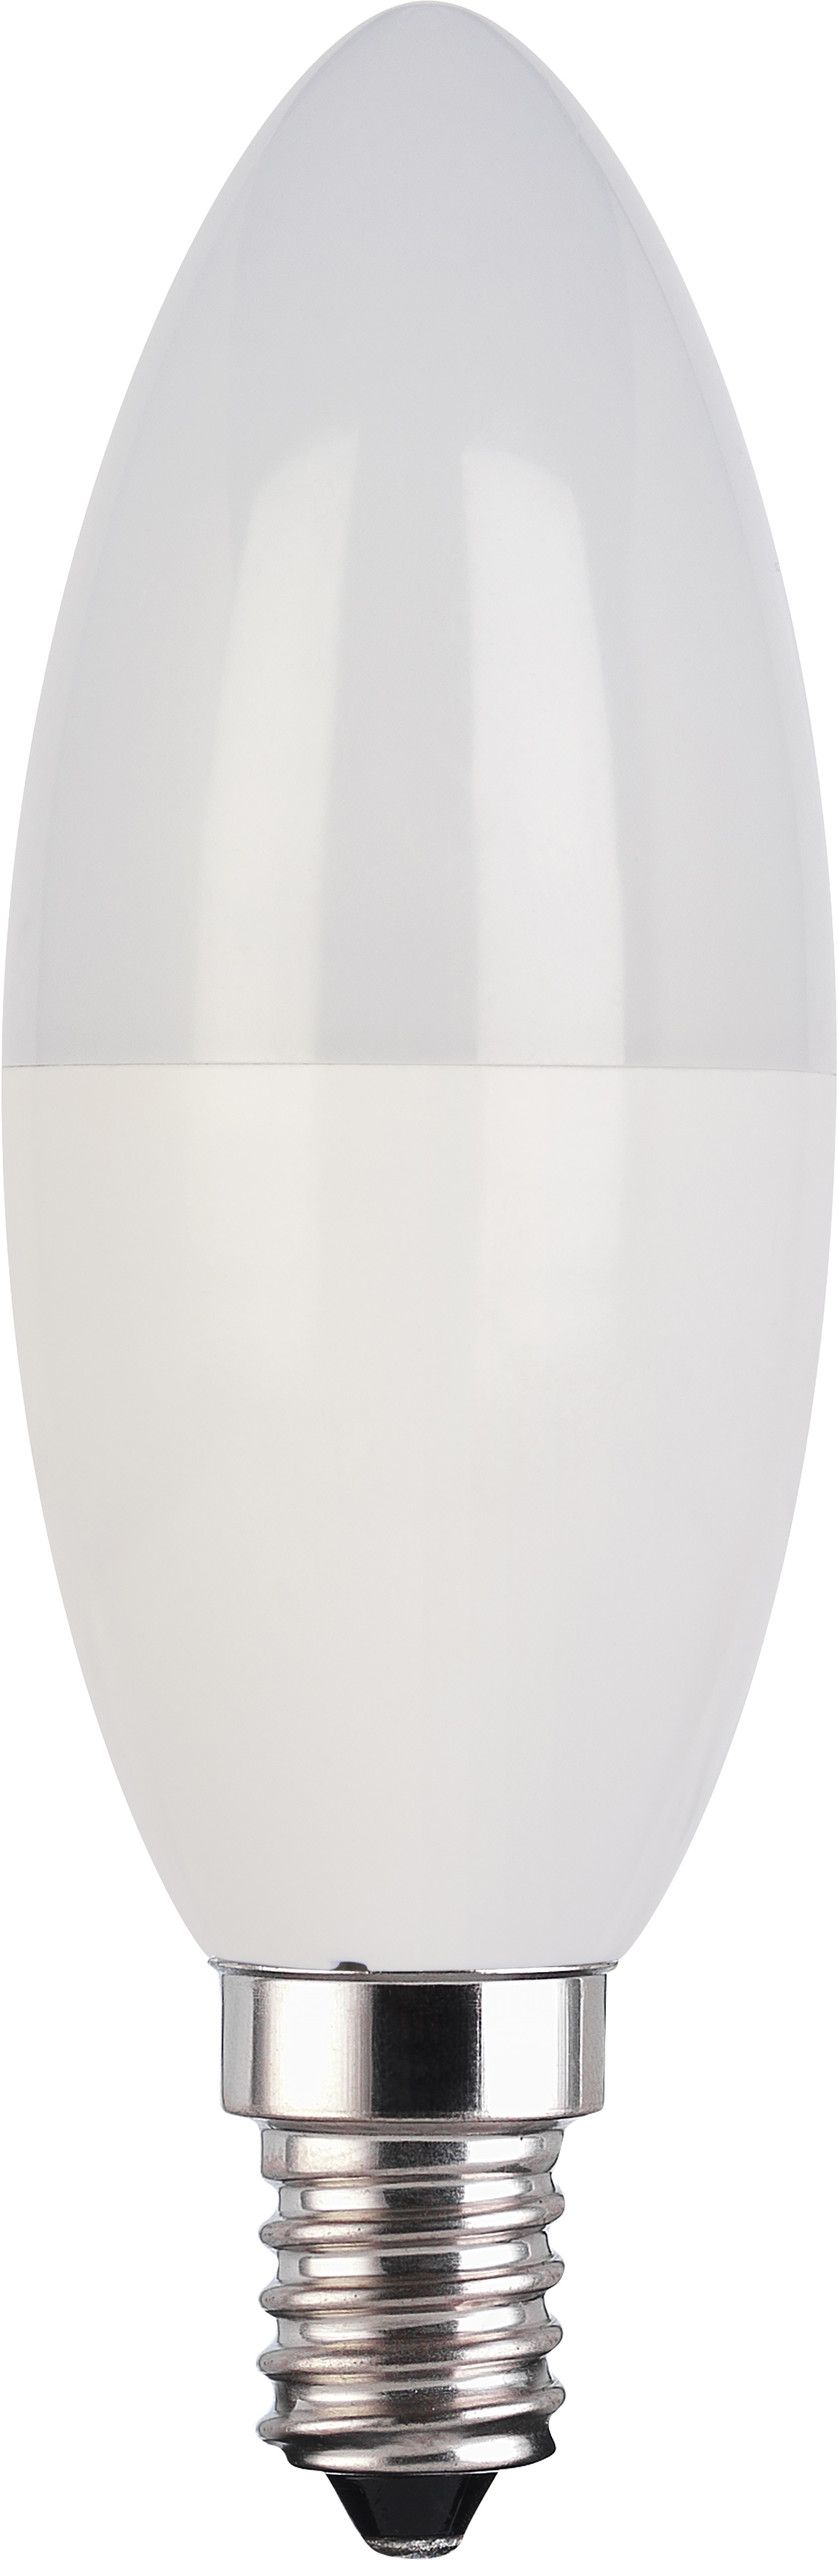 TCP Smart LED Lamp Classic White E14